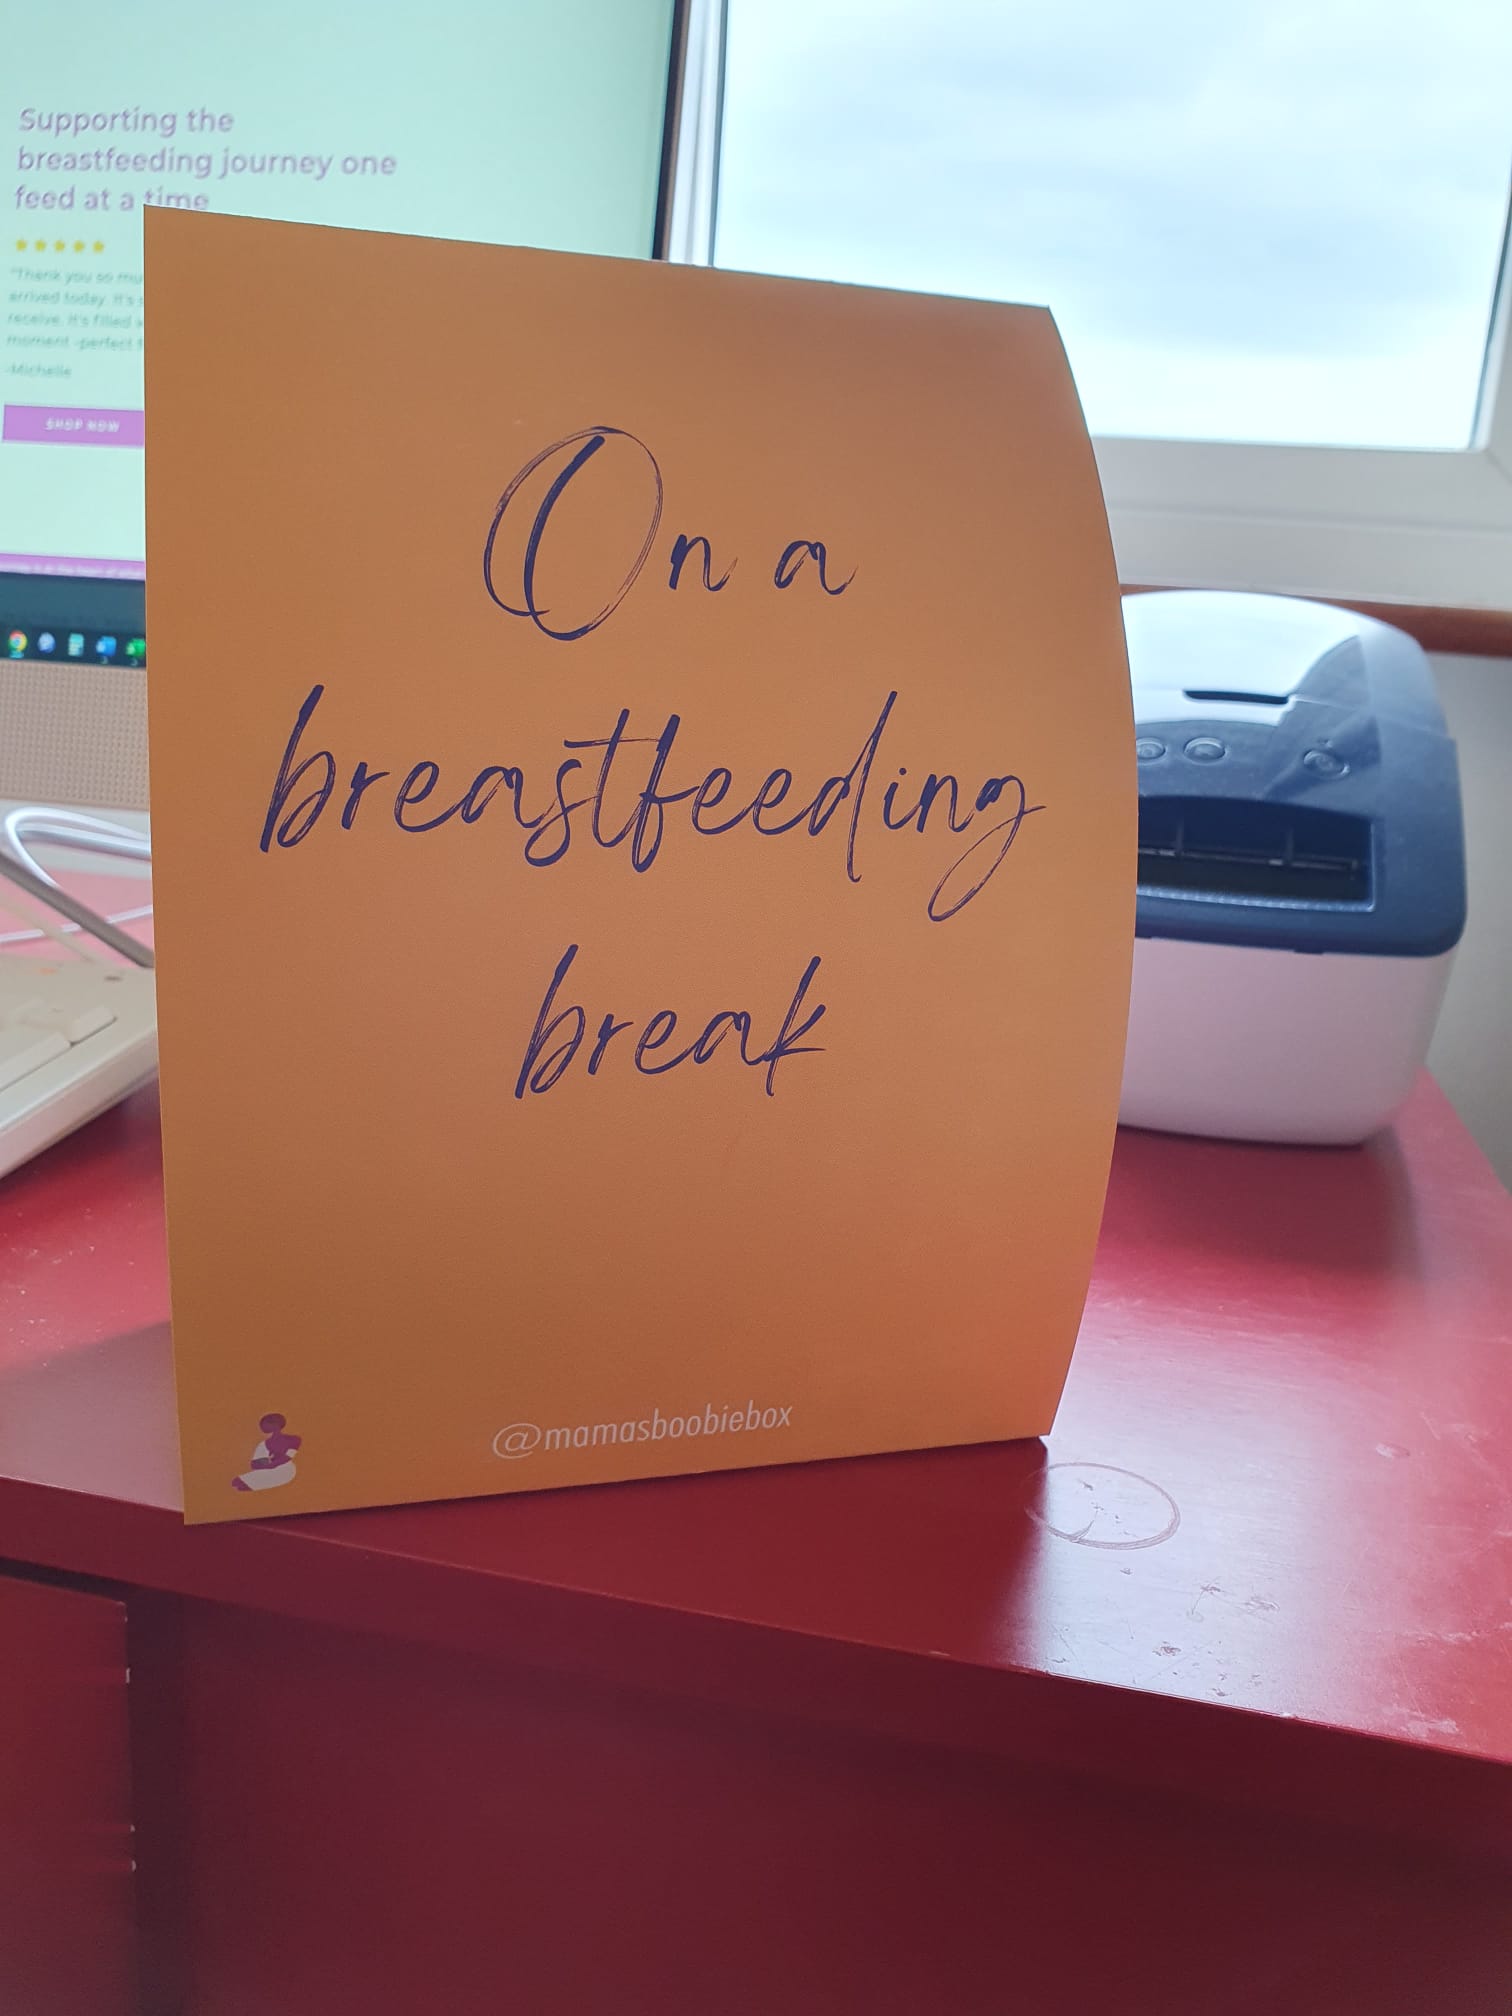 Breastfeeding Break display sign on desk- close up